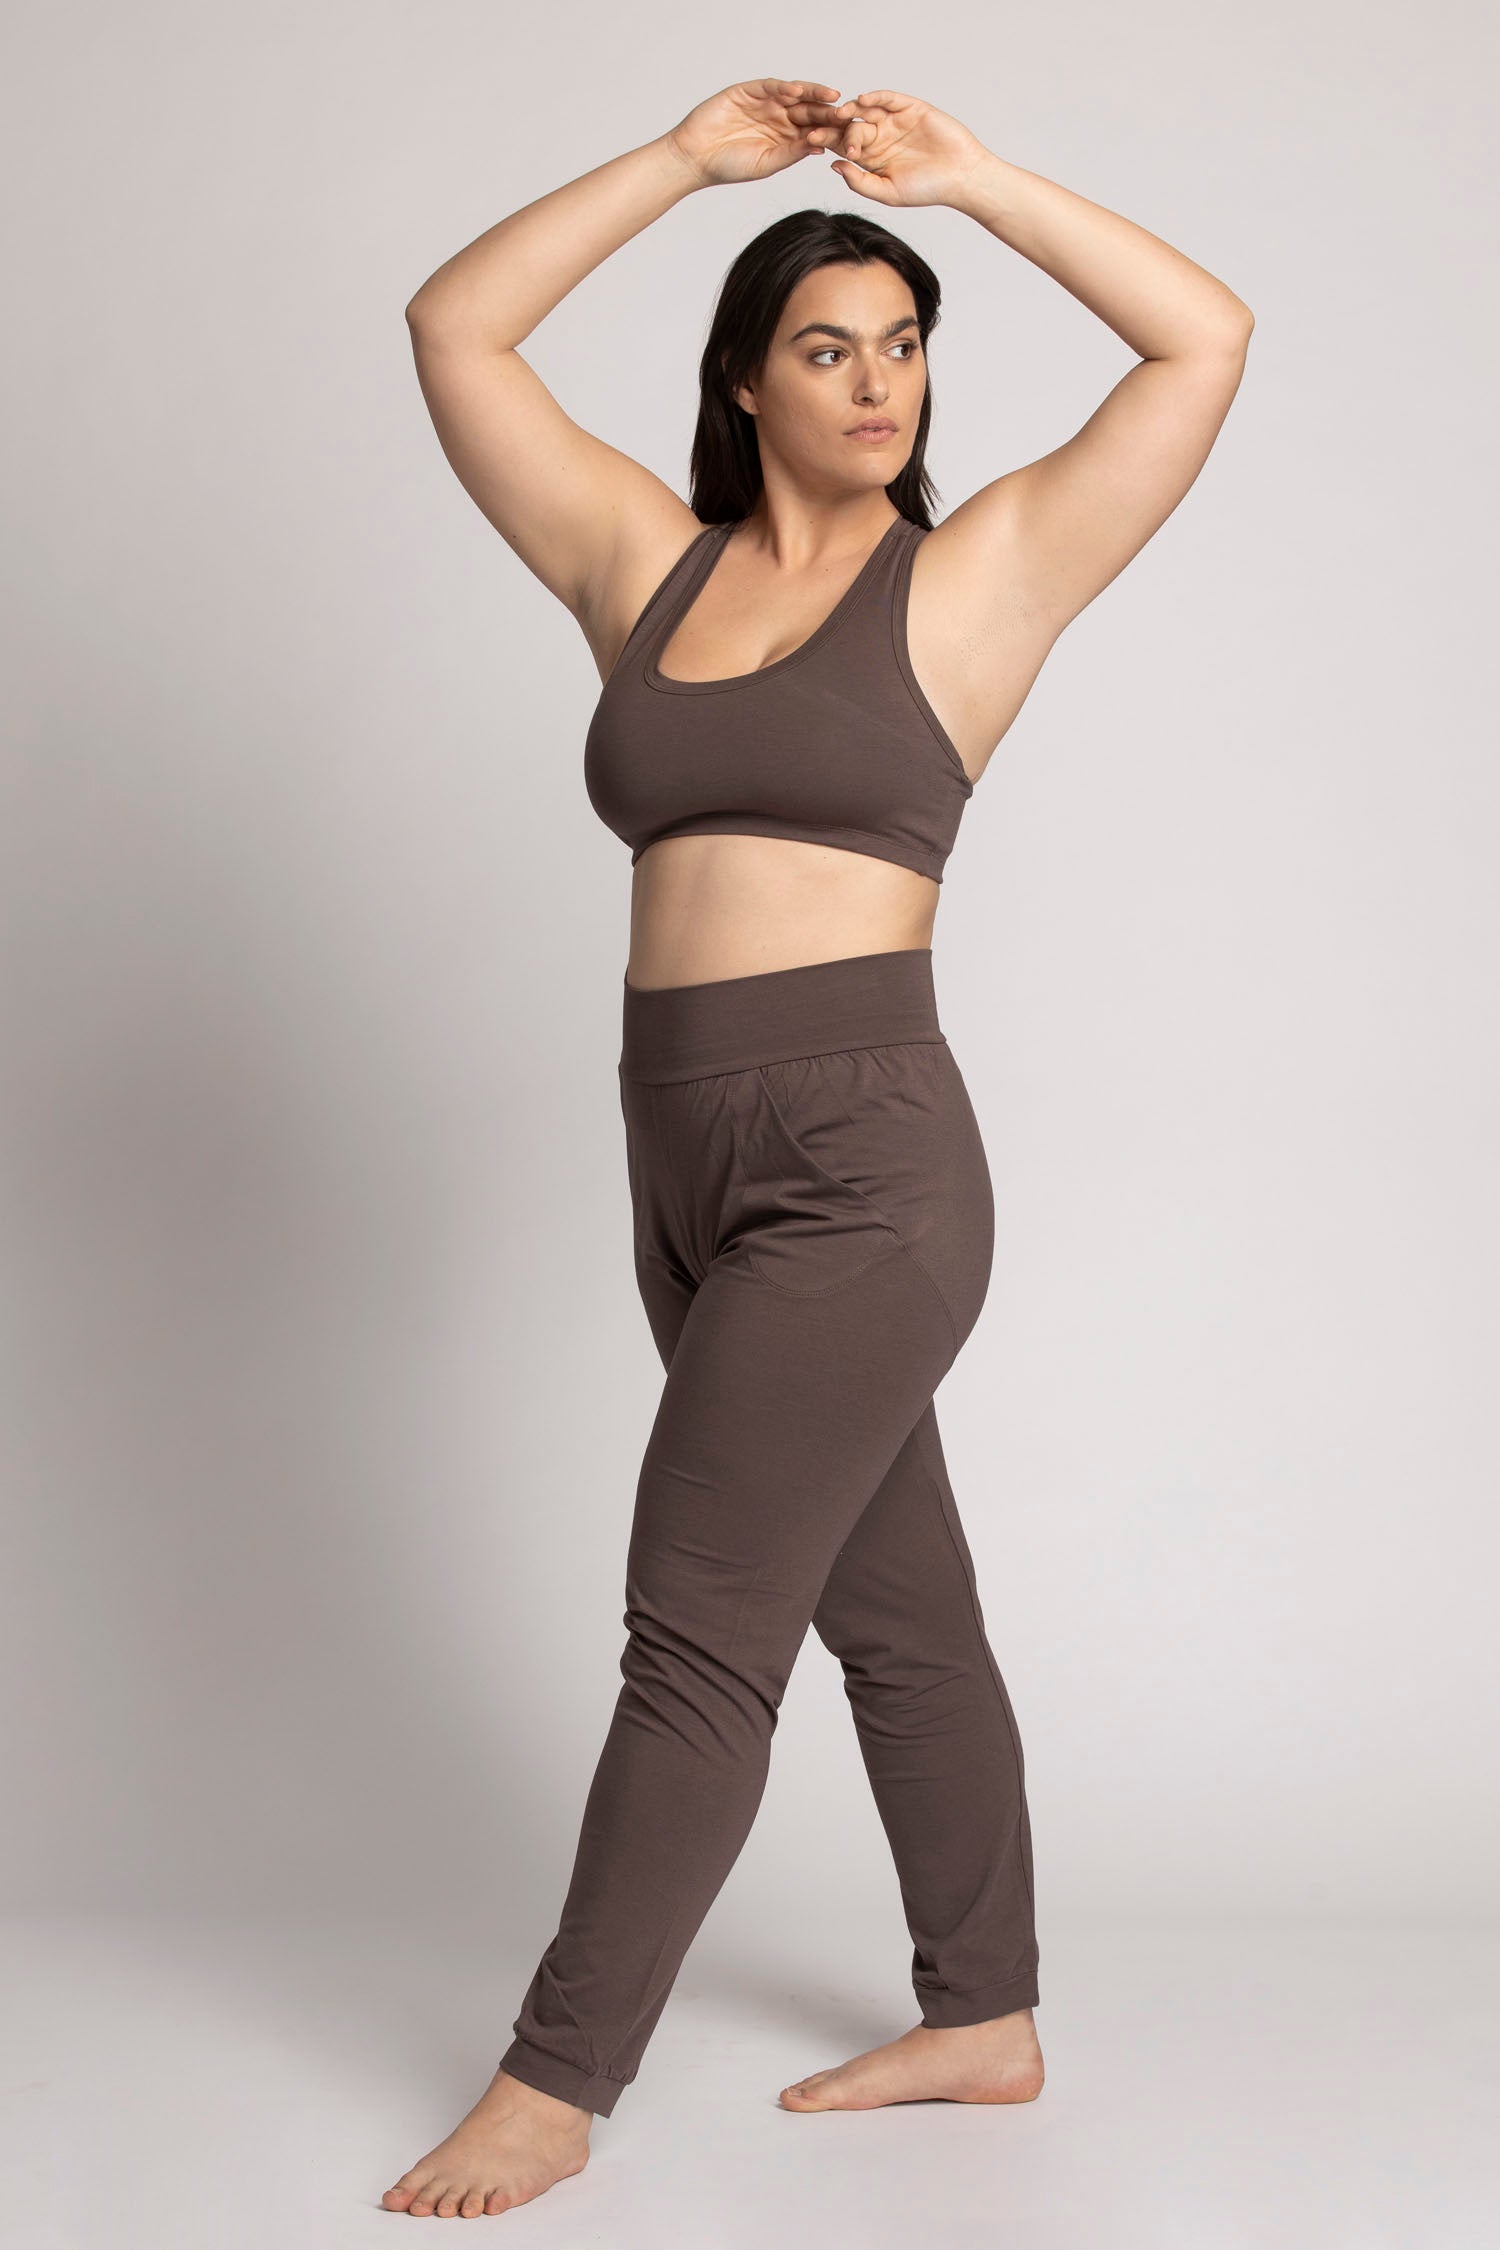 Yoga Clothes for Women, Yoga Pants & Tops